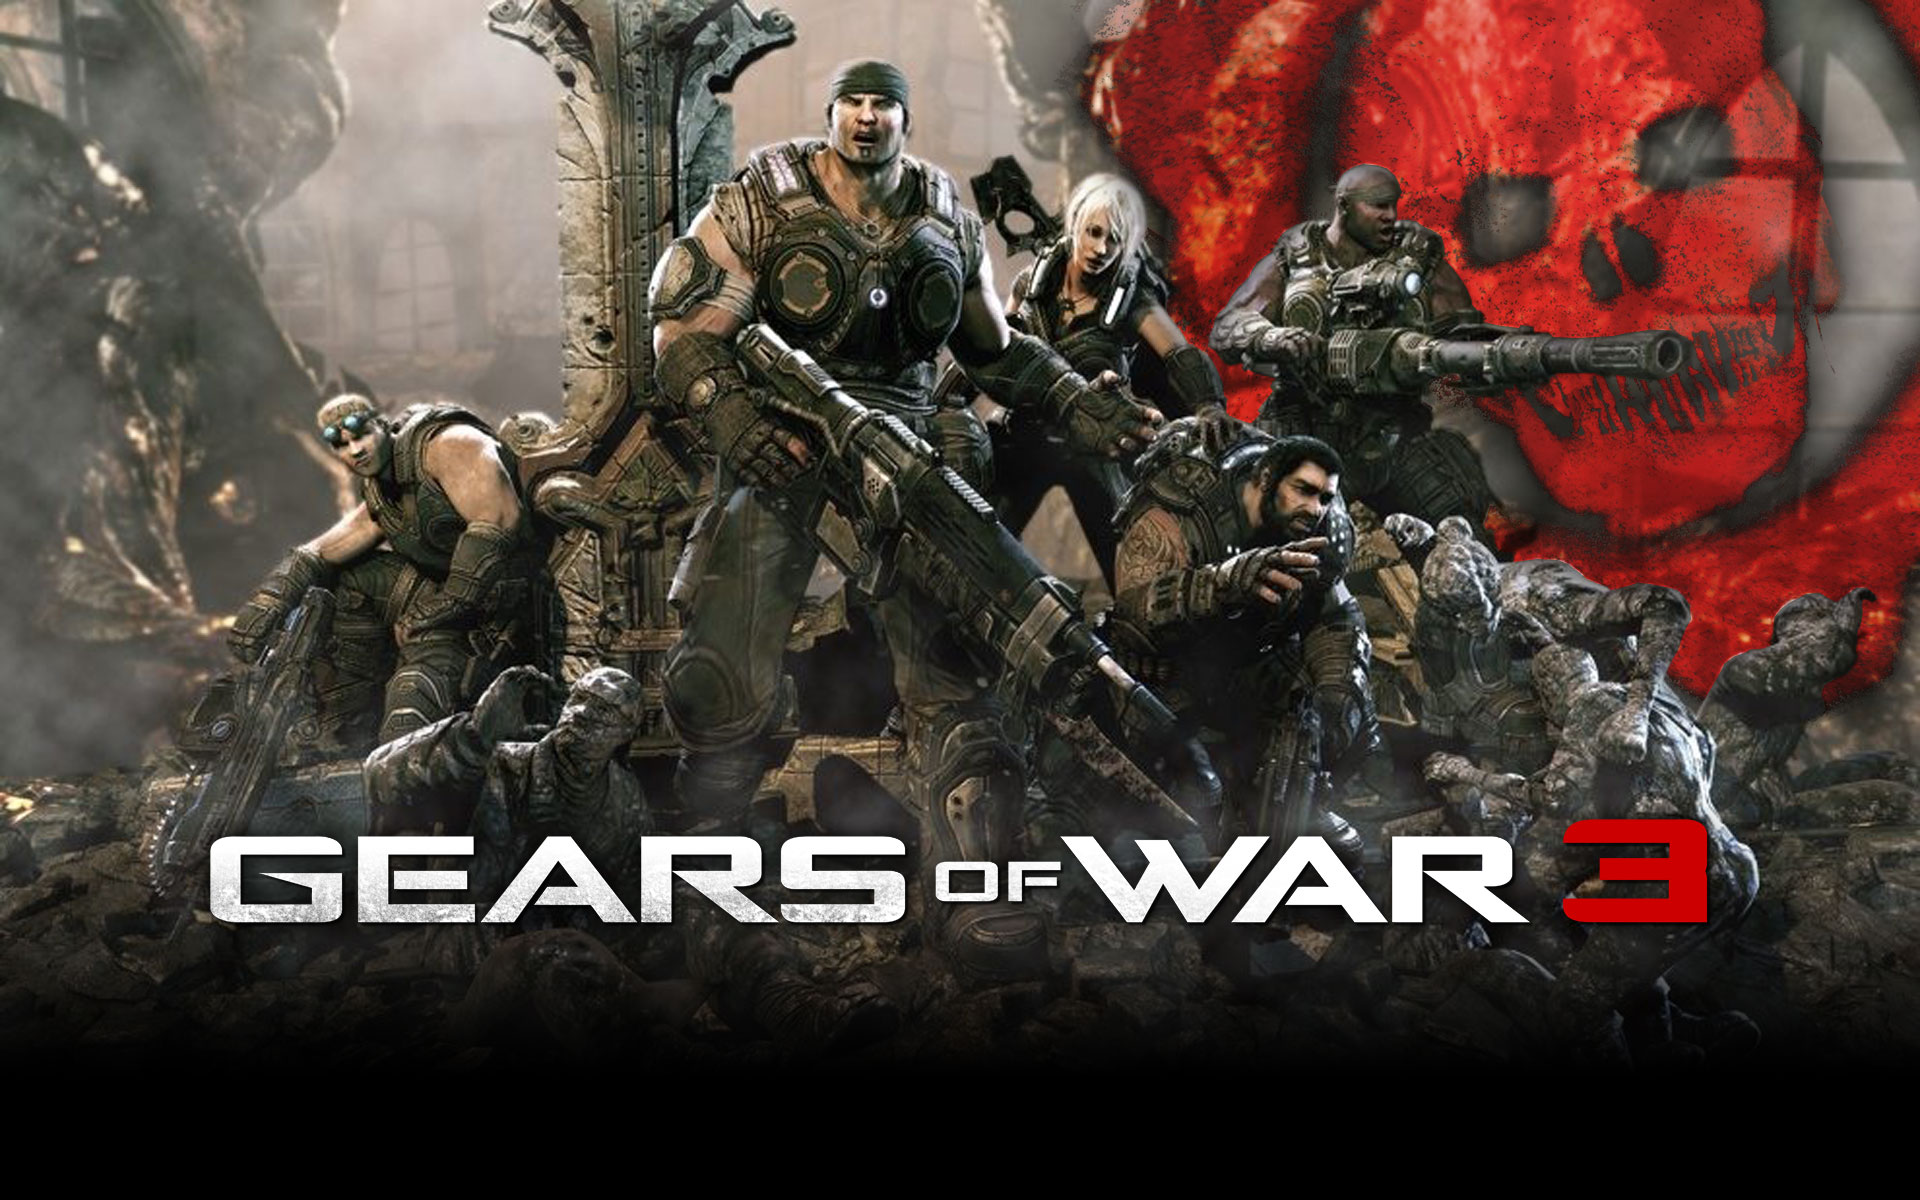 TeamXPG Trainer+4] Gears of War 3 | XPG Gaming Community